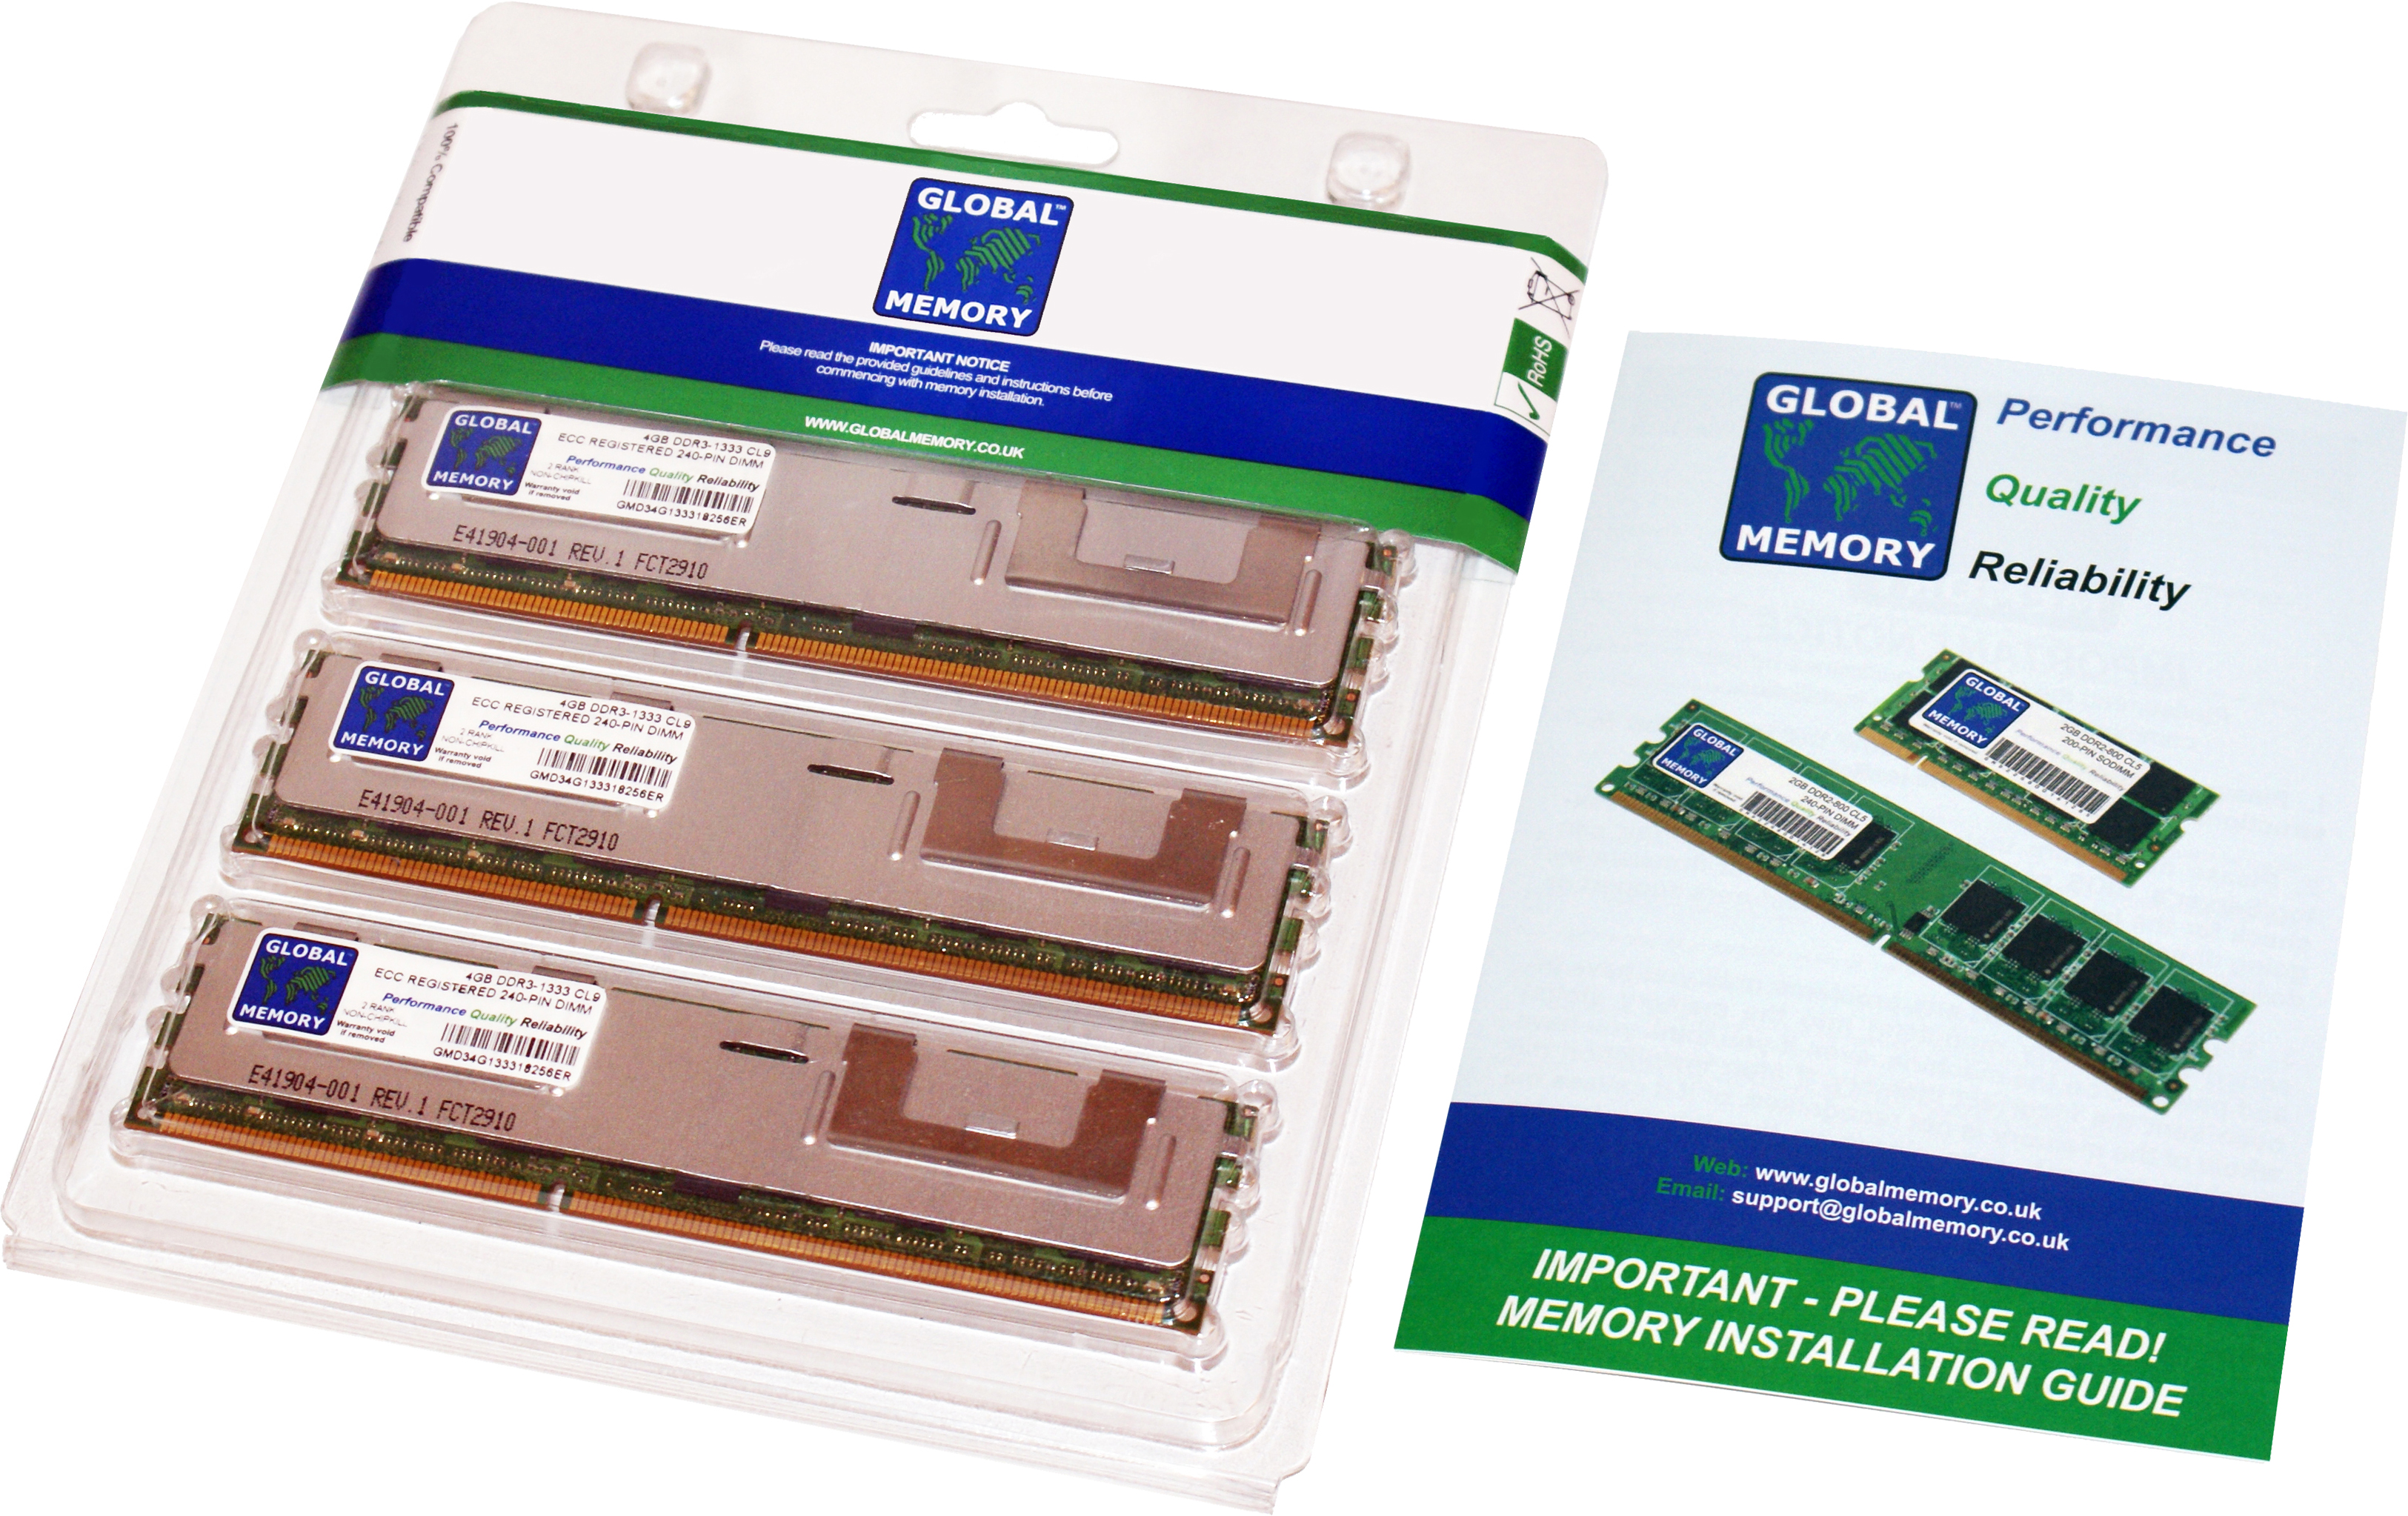 48GB (3 x 16GB) DDR3 1066MHz PC3-8500 240-PIN ECC REGISTERED DIMM (RDIMM) MEMORY RAM KIT FOR DELL SERVERS/WORKSTATIONS (12 RANK KIT NON-CHIPKILL)